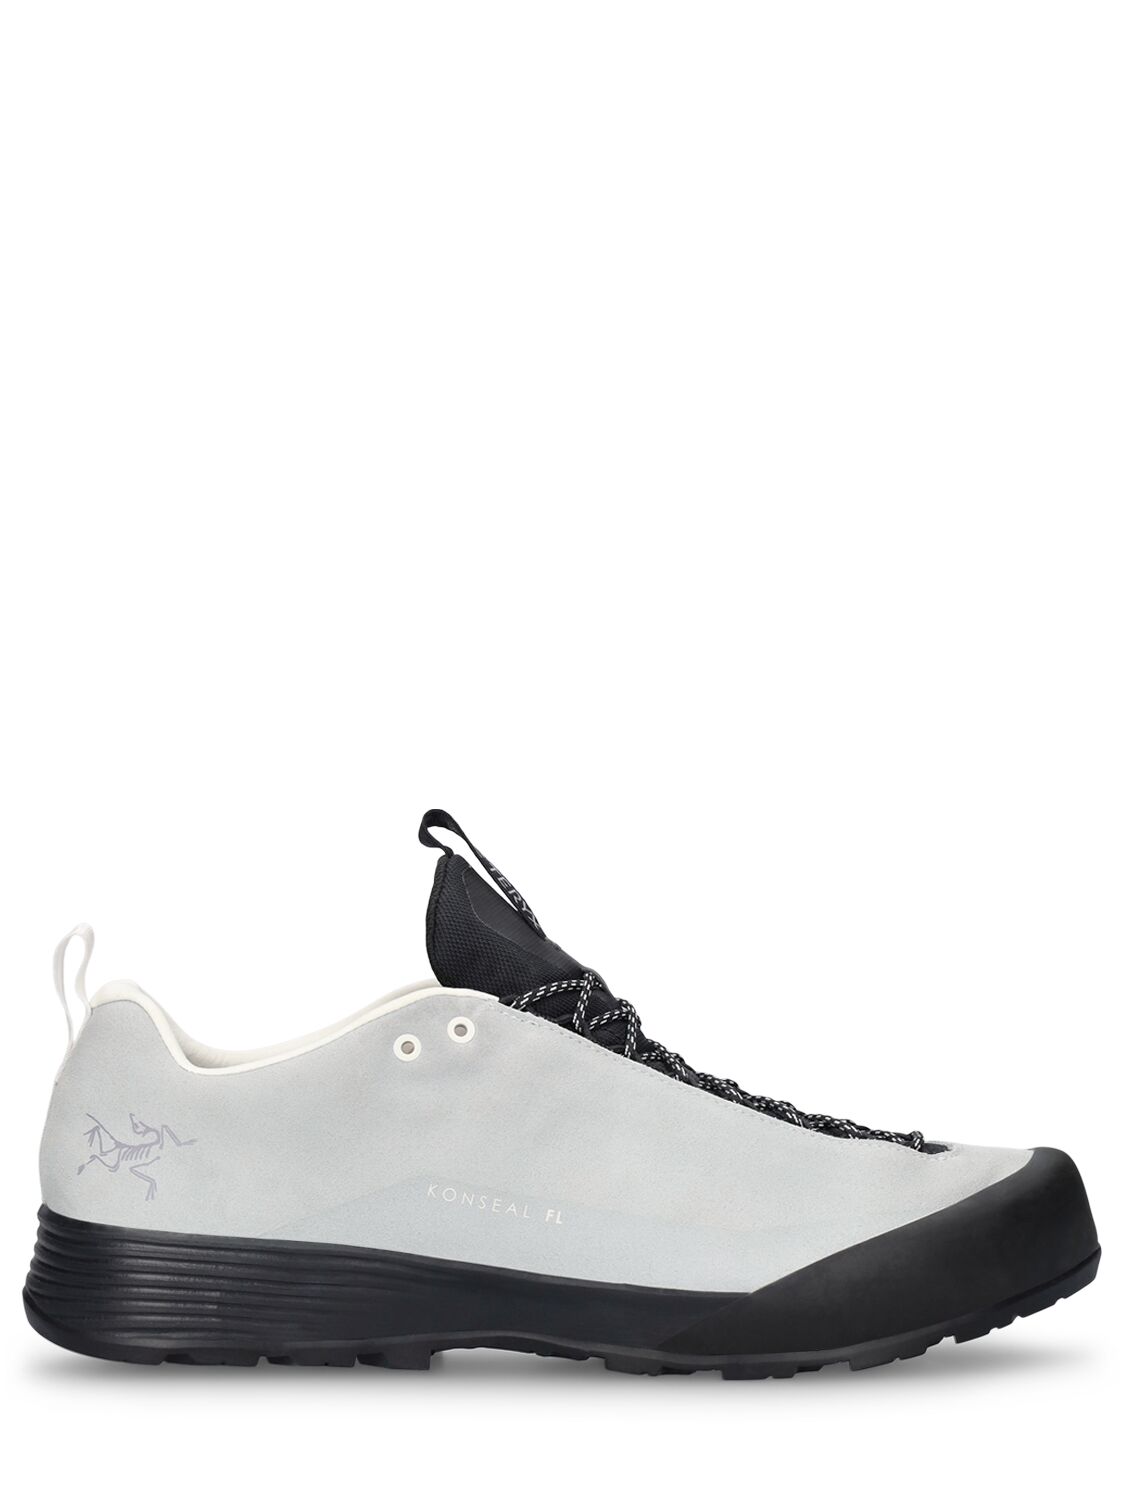 Sneakers Konseal Fl 2 Leather Gtx - ARC'TERYX - Modalova